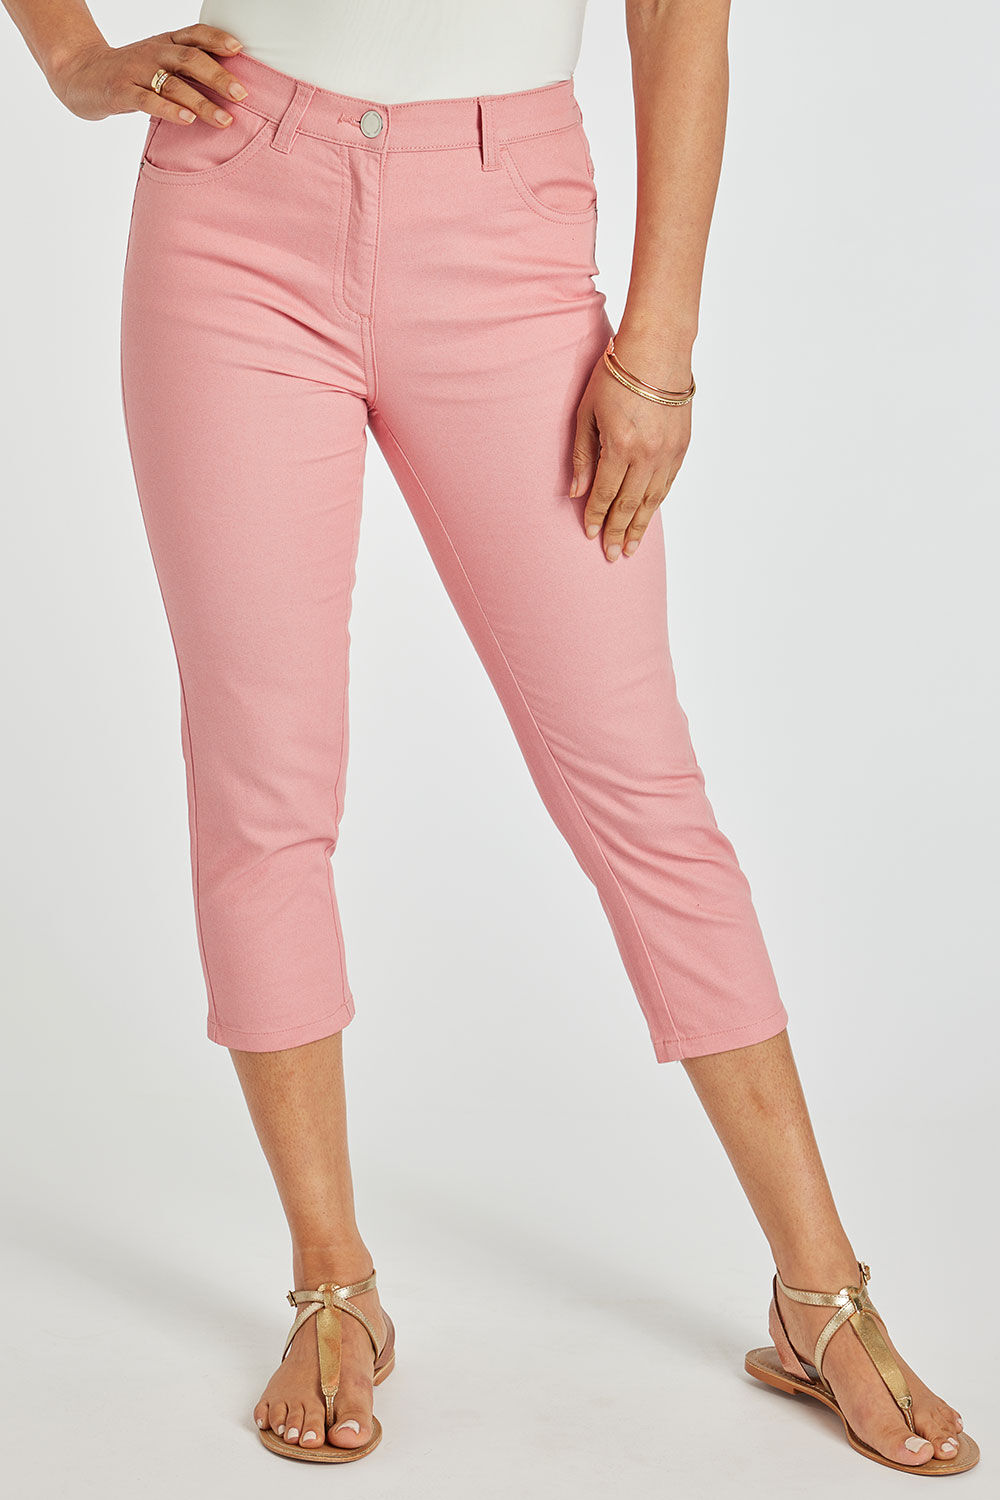 Bonmarche Peach The Sara Coloured Cropped Jeans, Size: 26